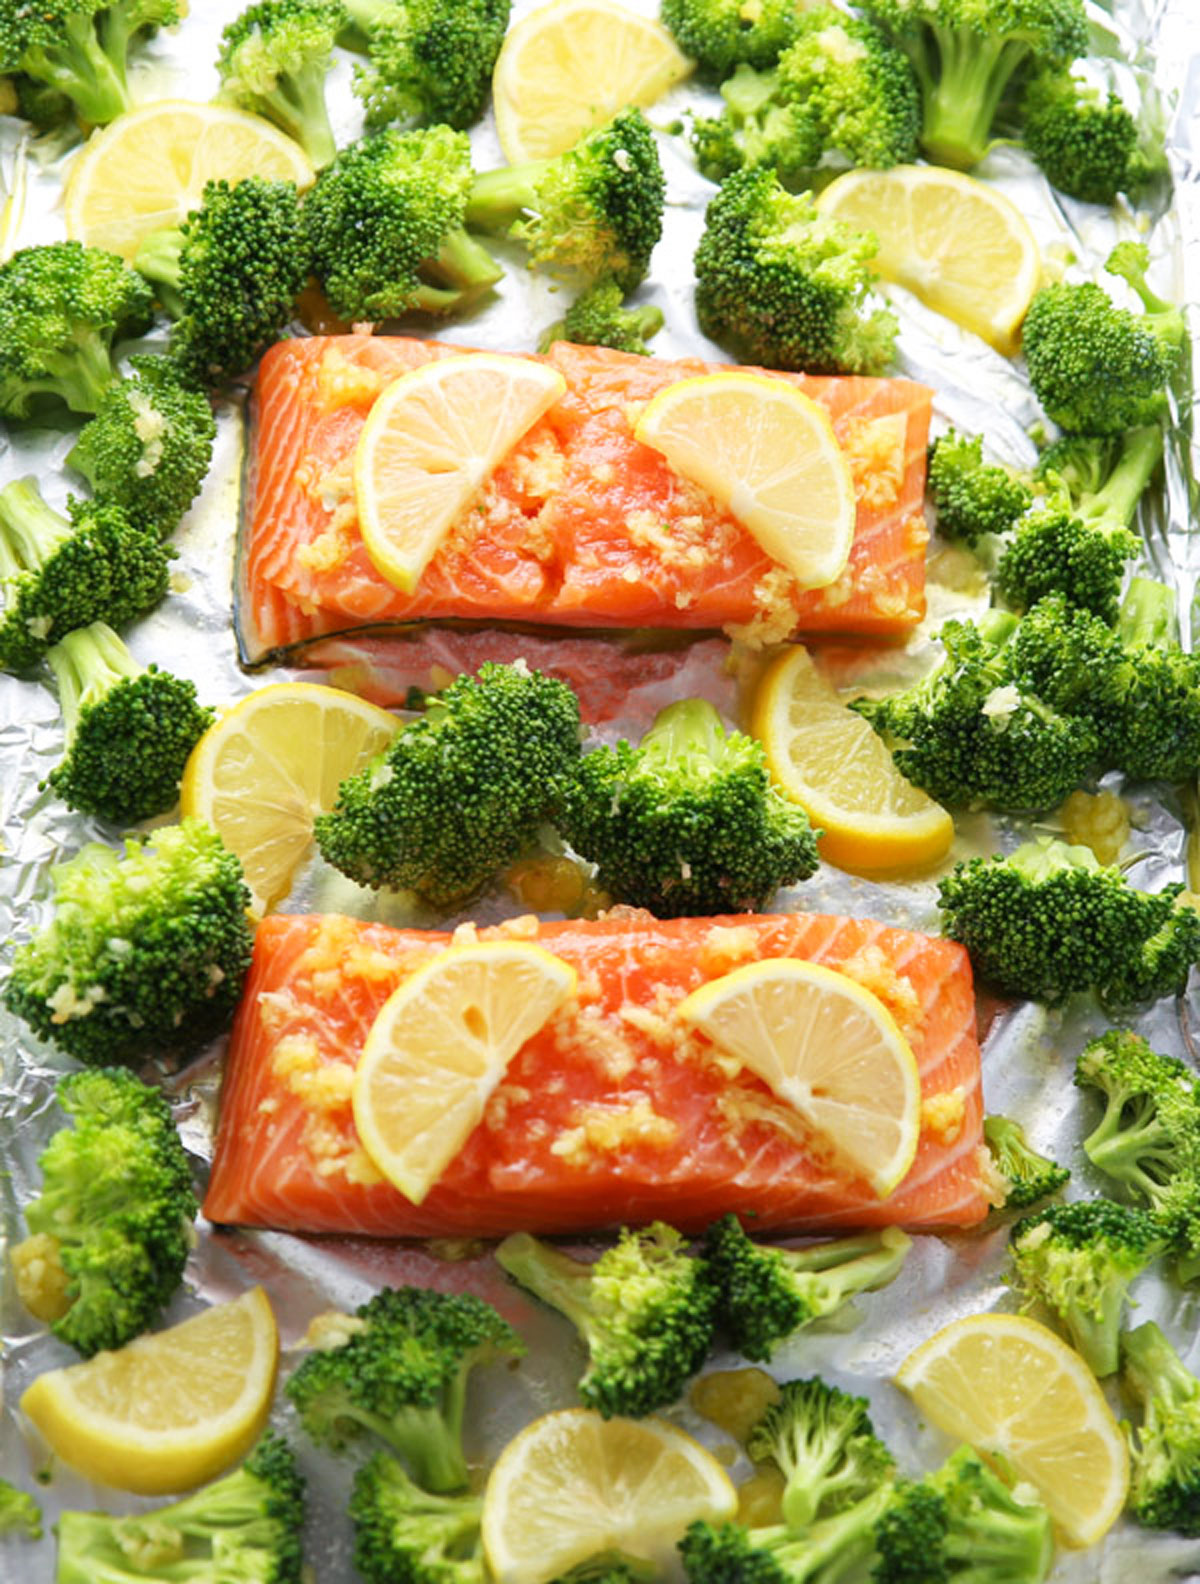 sheet pan lemon garlic salmon with broccoli